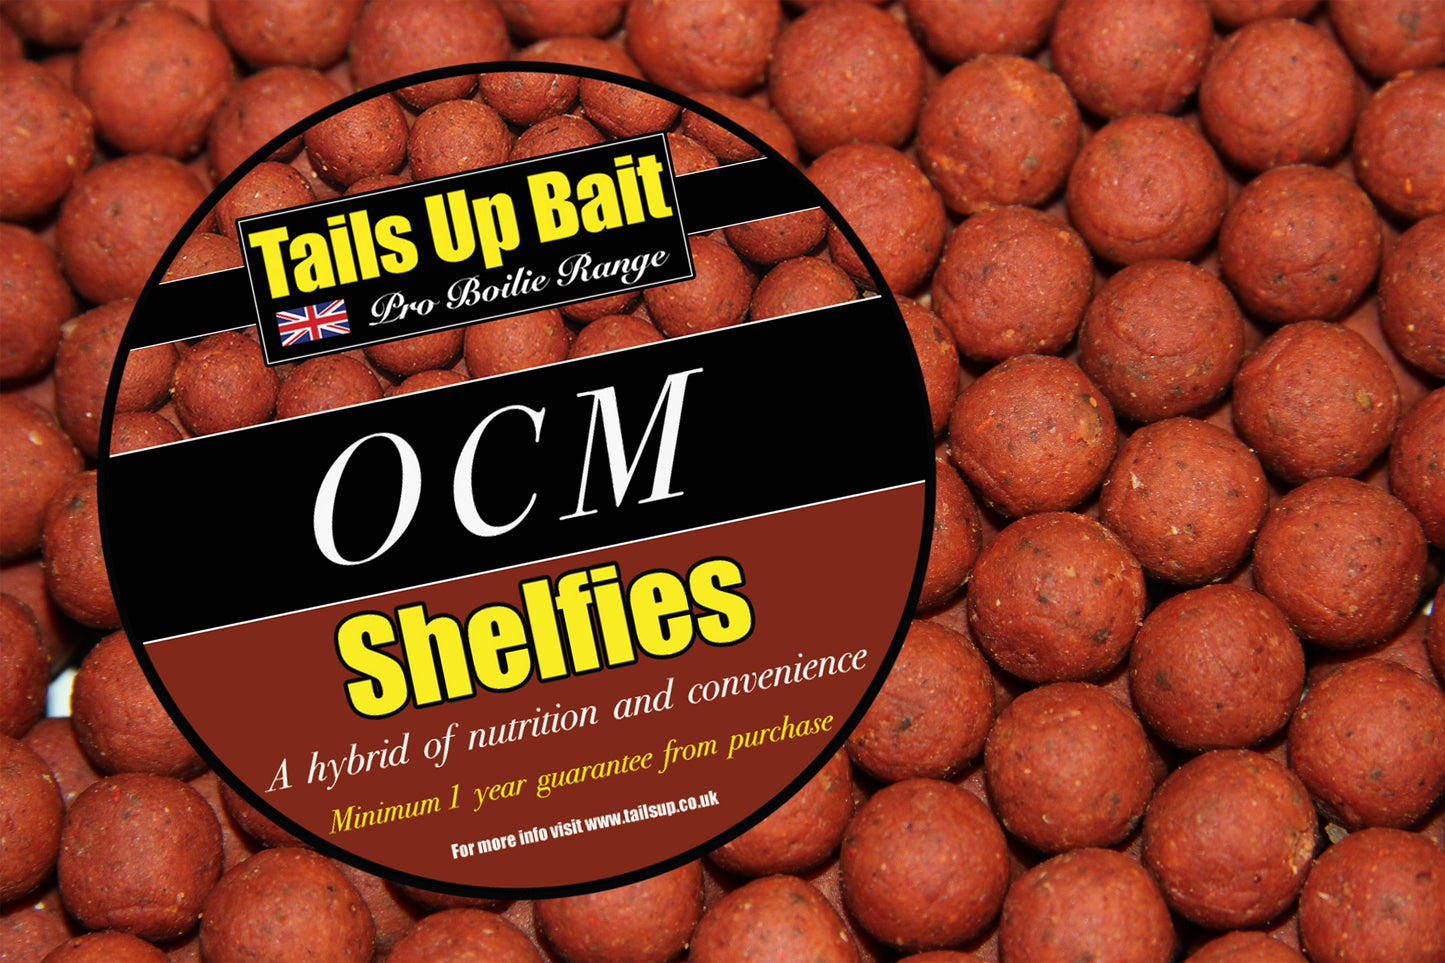 OCM Hybrid Shelfies